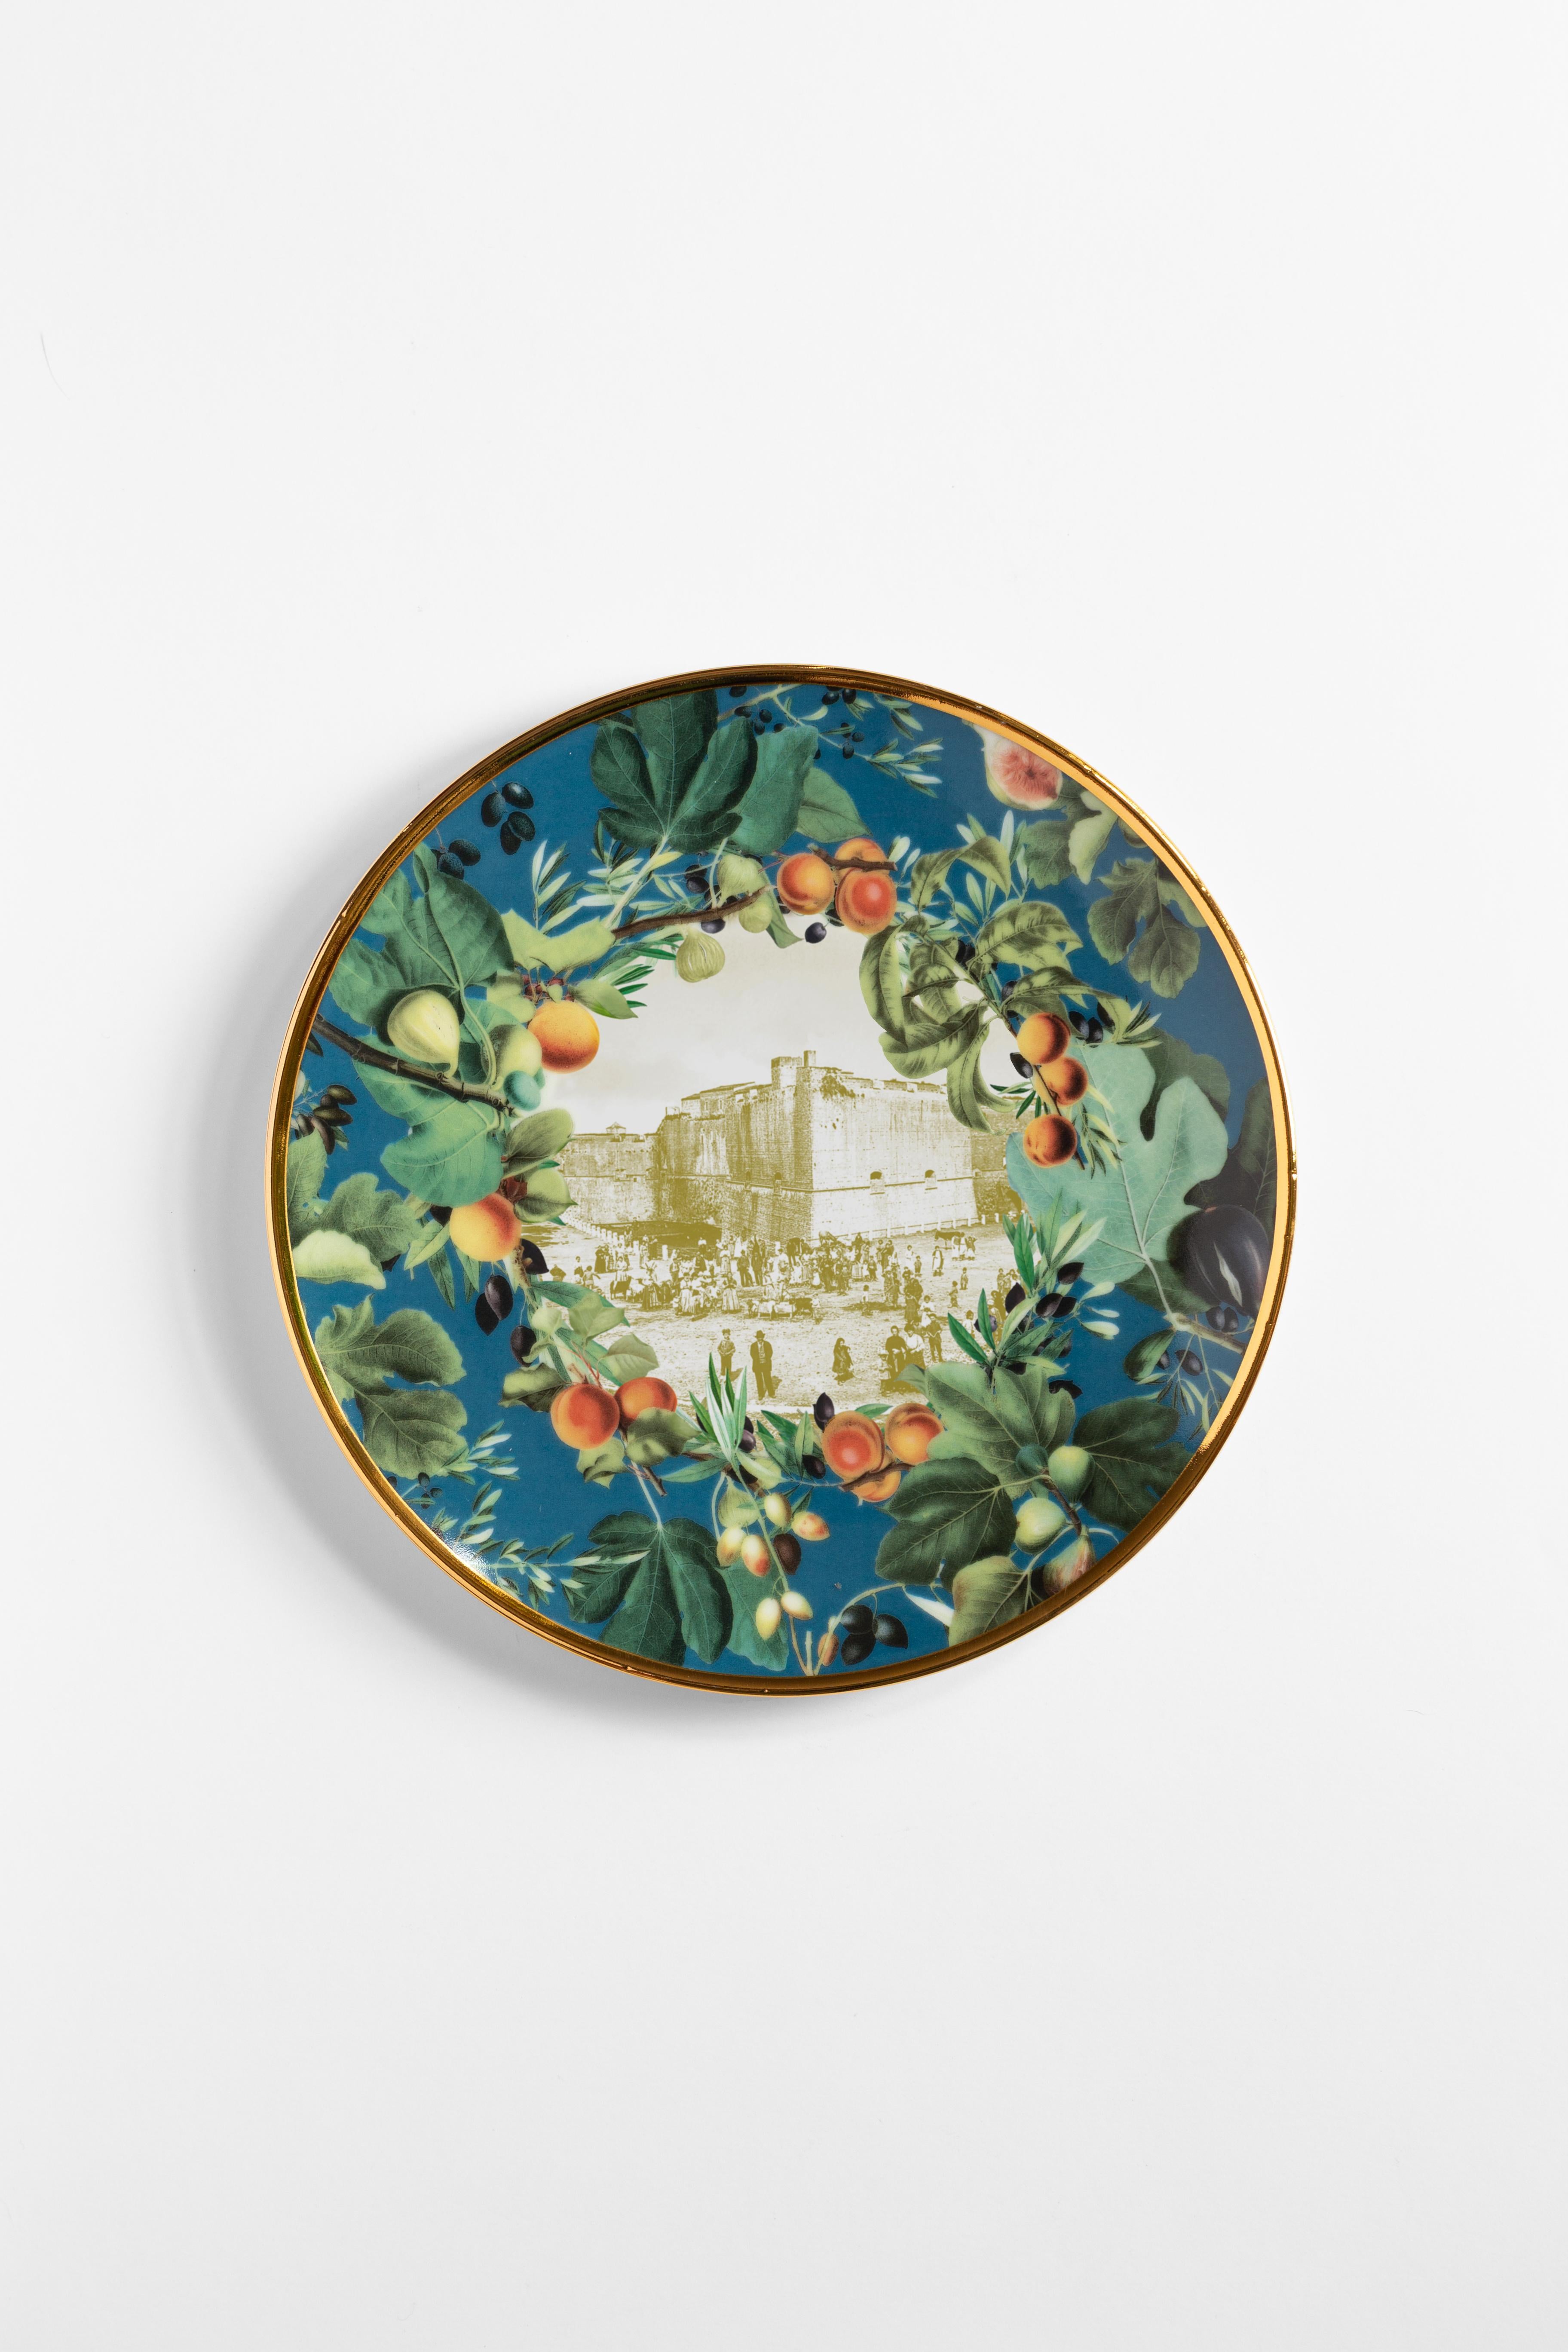 Apulia, Seven Contemporary Porcelain Dessert Plates with Decorative Design For Sale 1